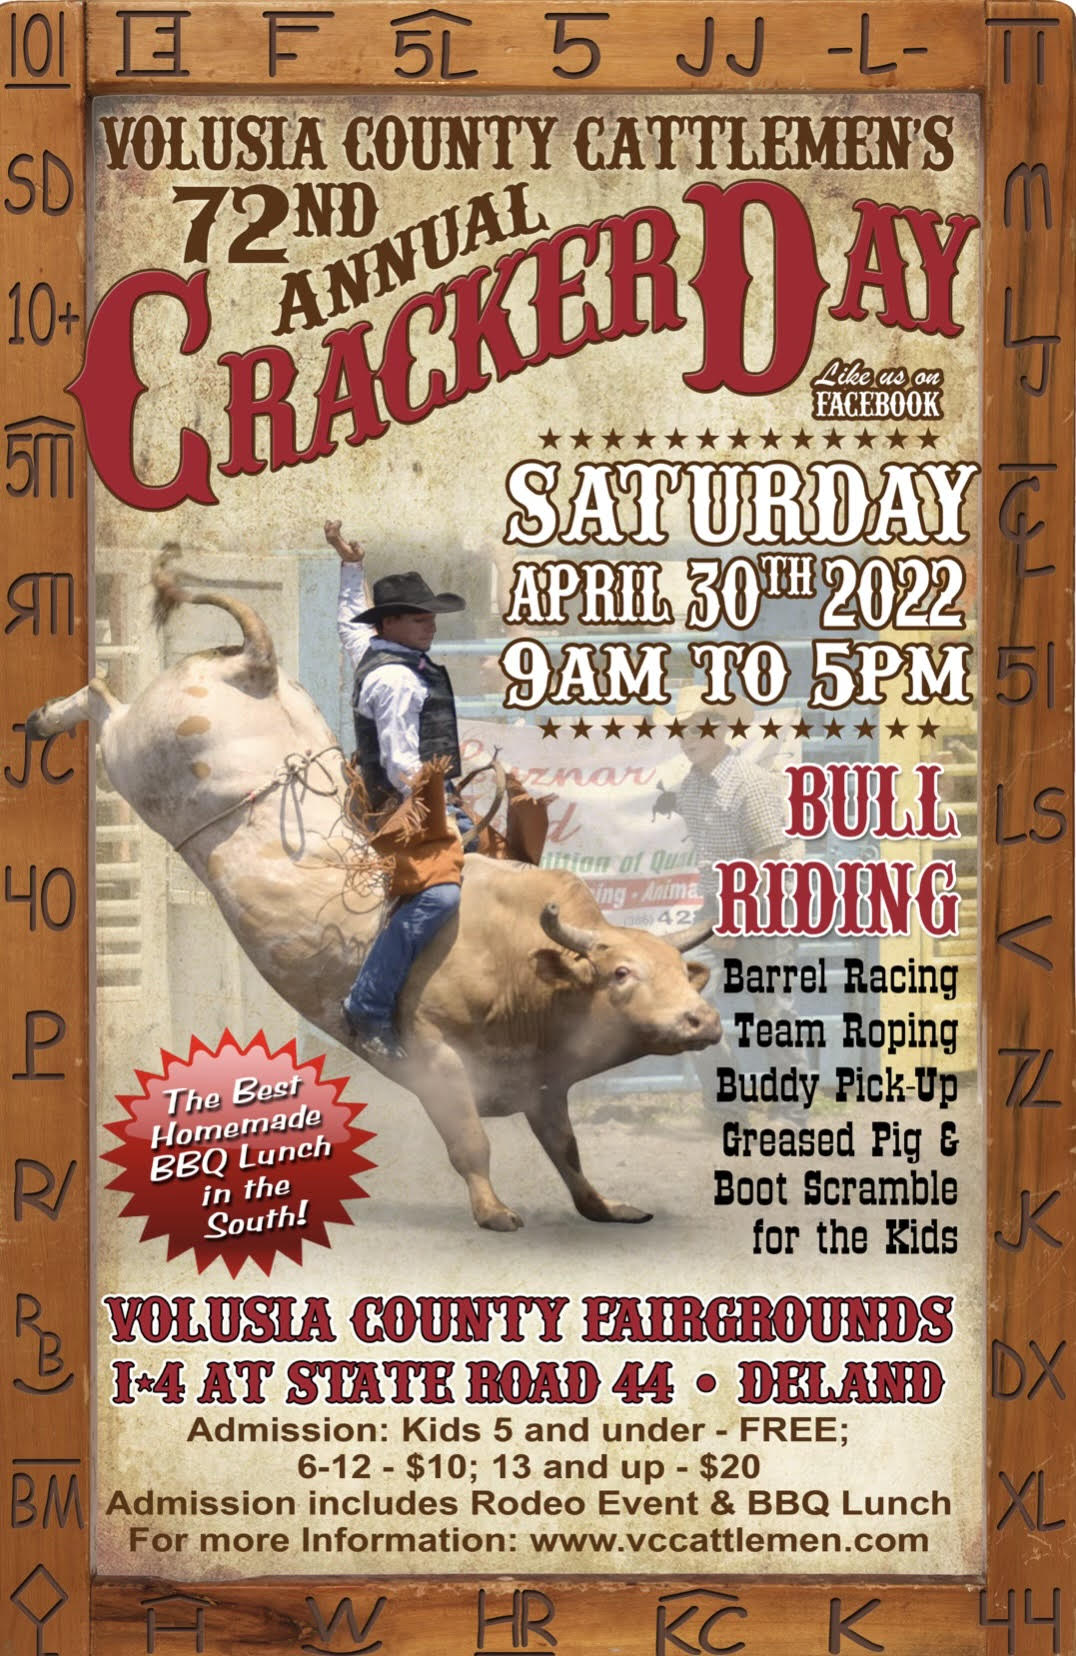 VCCA Volusia County Cattlemen's Association Cracker Day